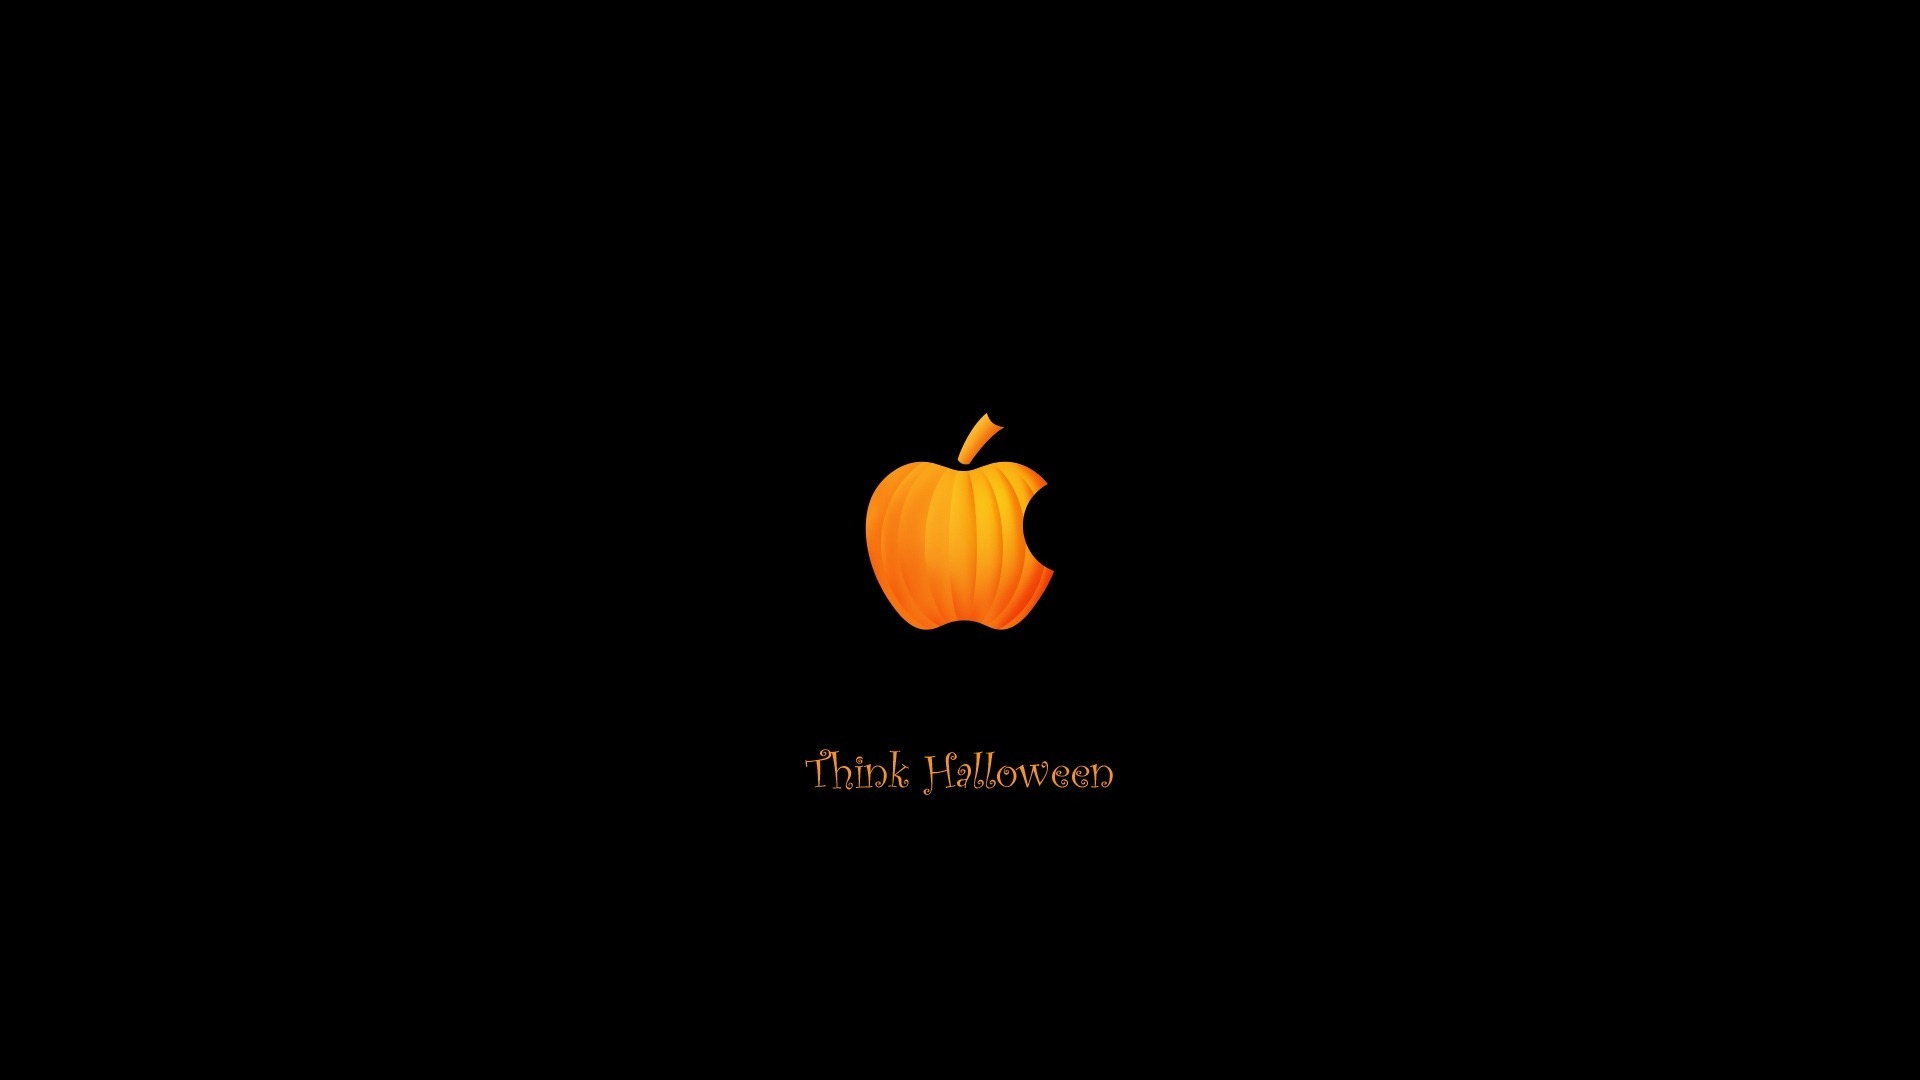 Pumpkin Apple Desktop Pc And Mac Wallpaper